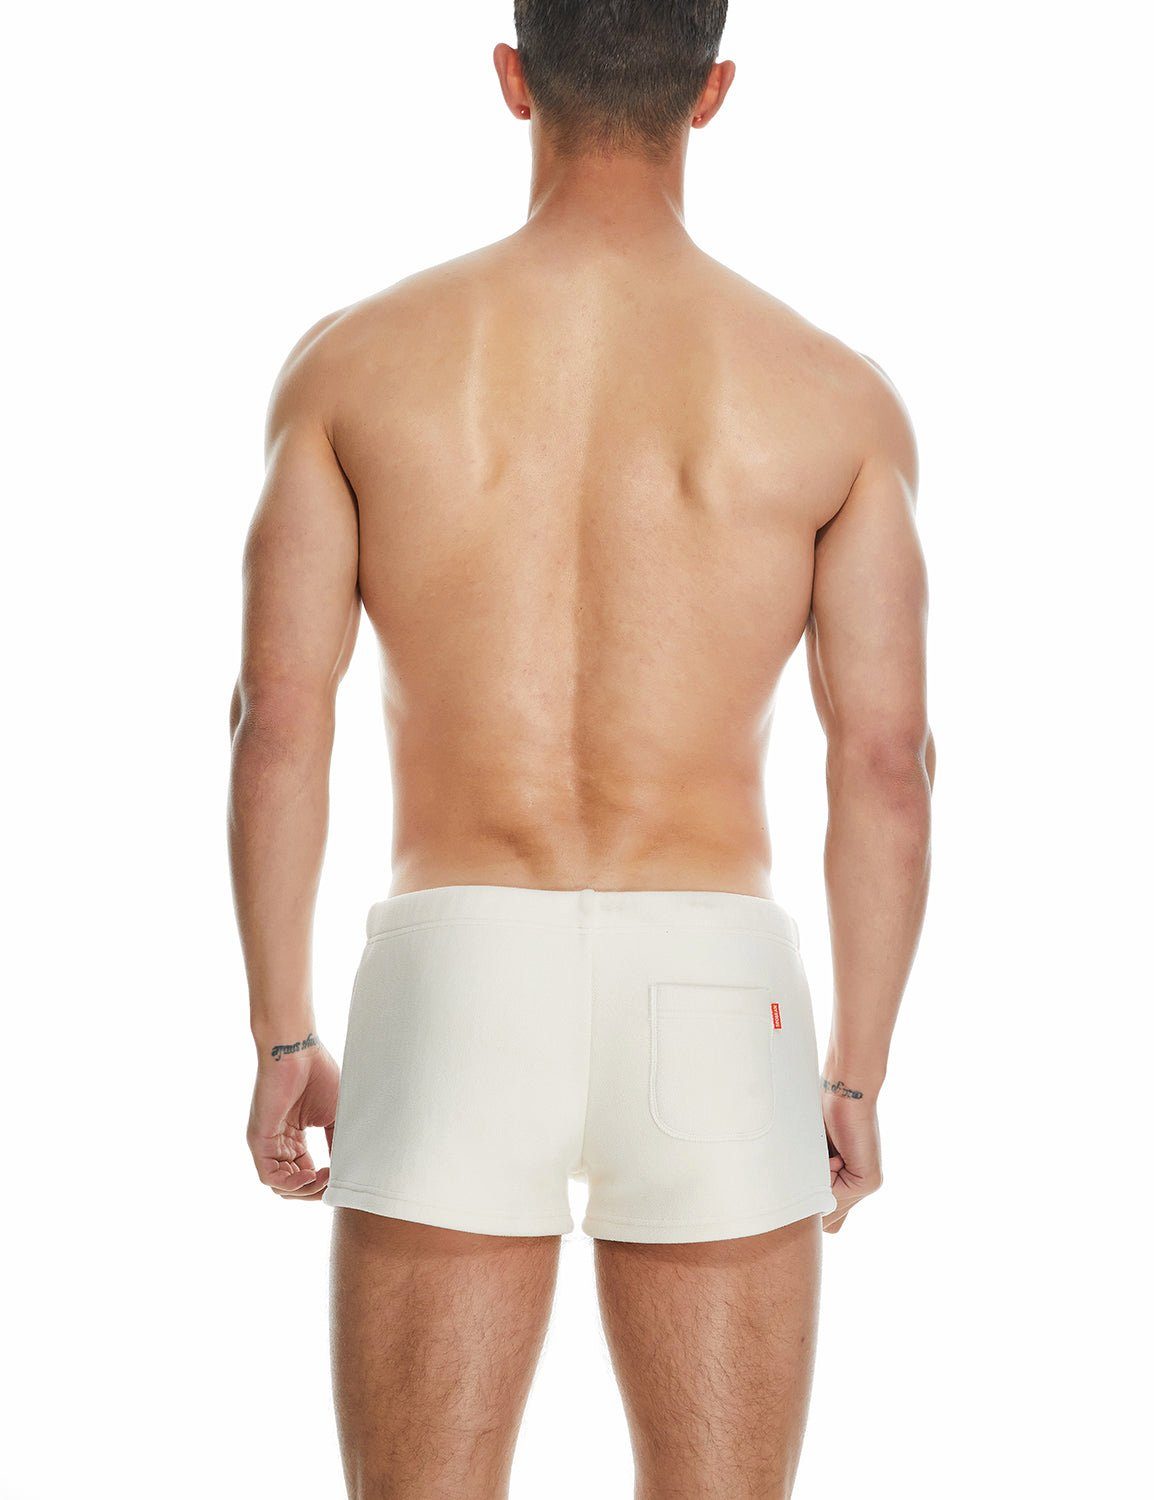 Sportbekleidung Aktivwear Weiß Shorts BEEMEN Fleece Boxershorts Shorts Strandshorts